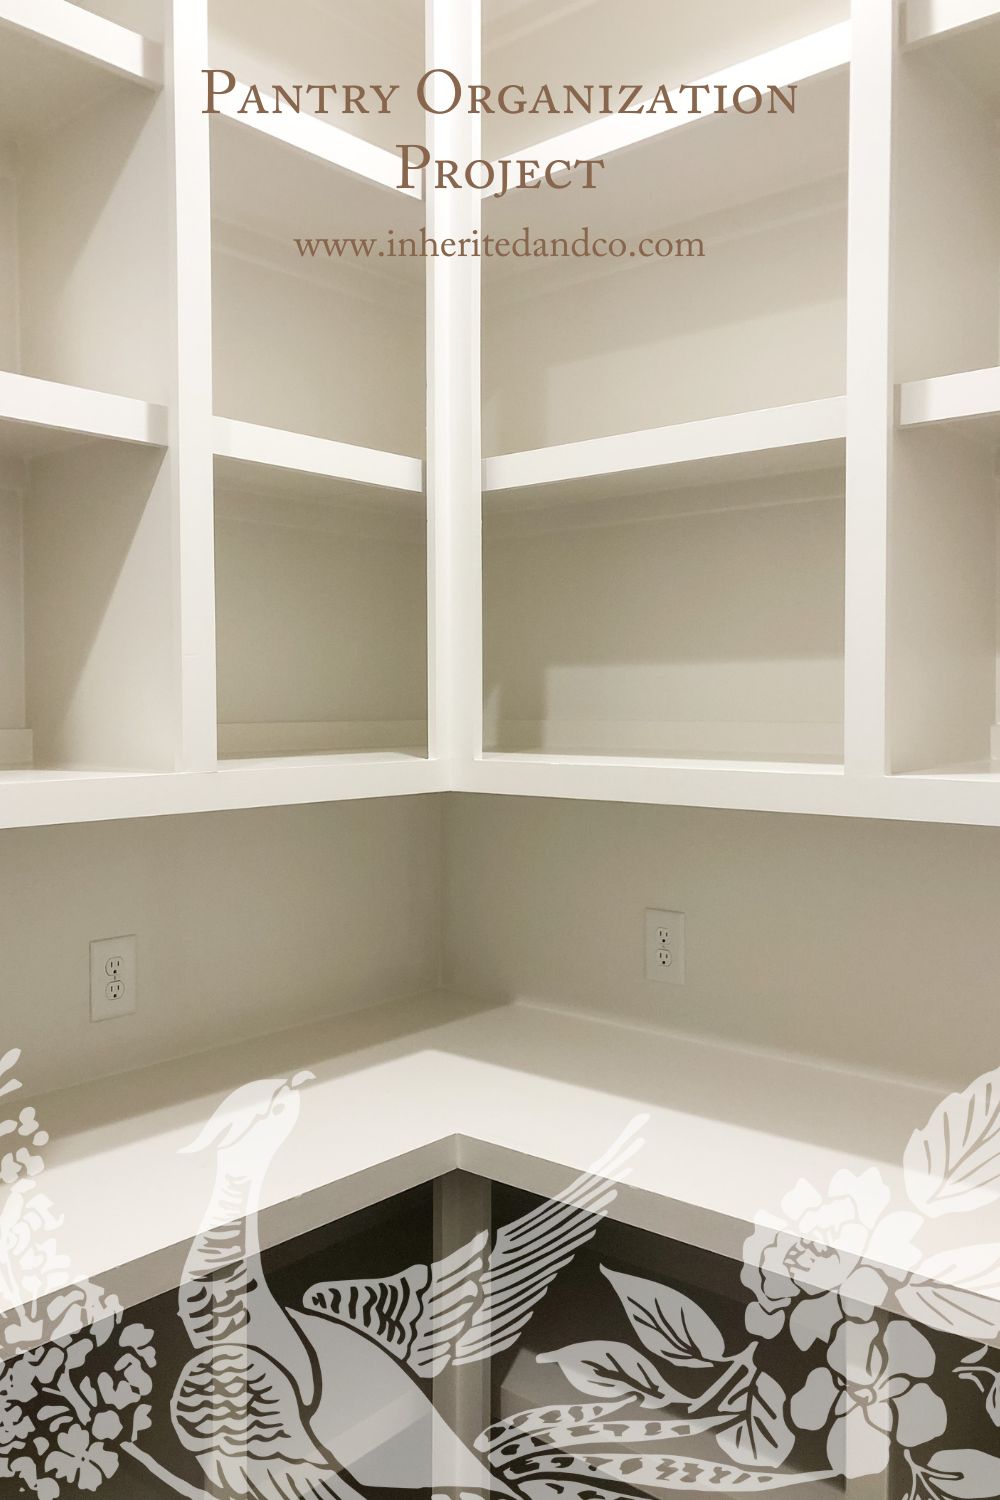 Empty white shelves